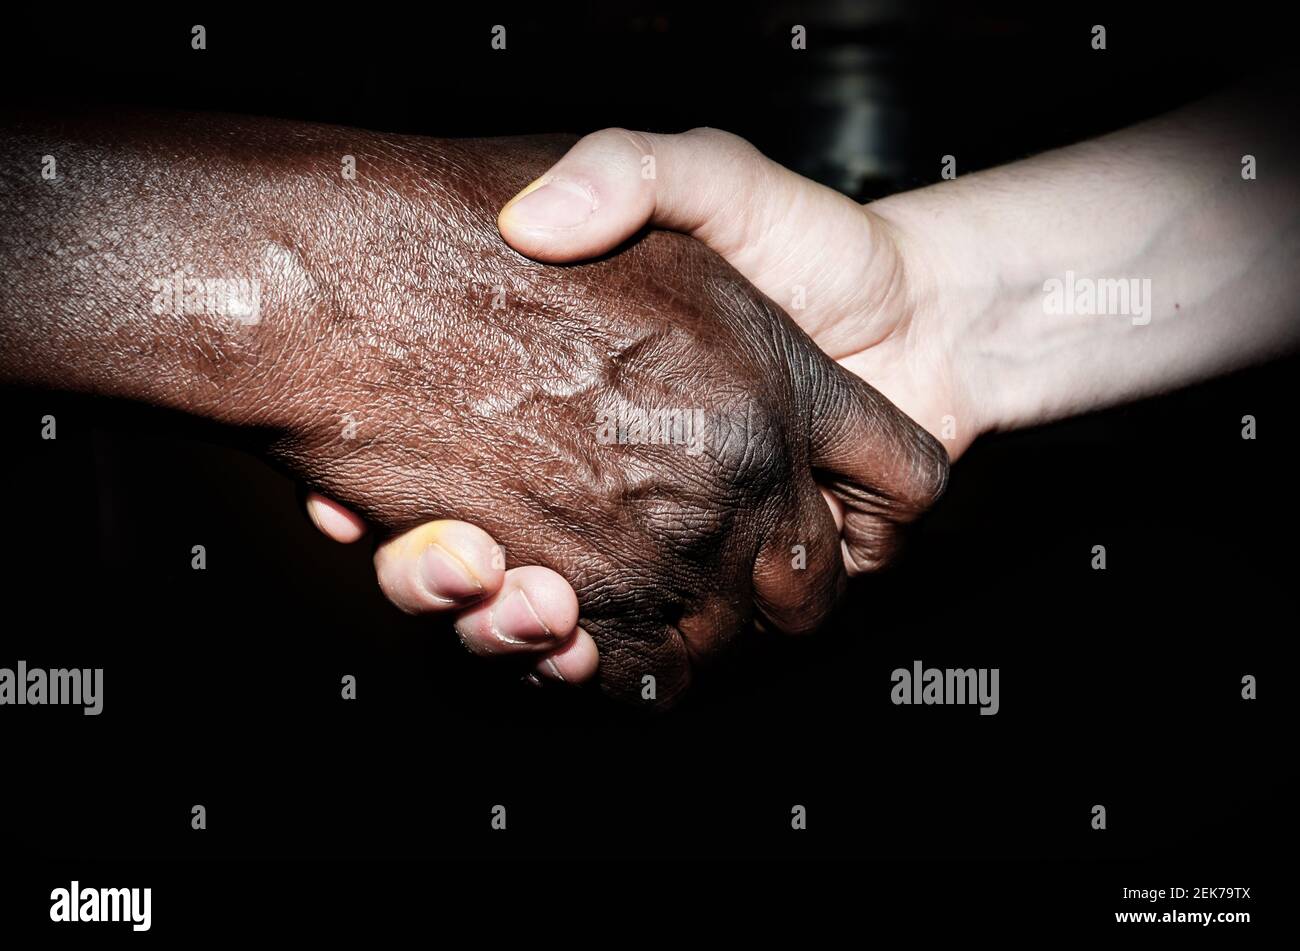 Handshake between an African and a European Stock Photo